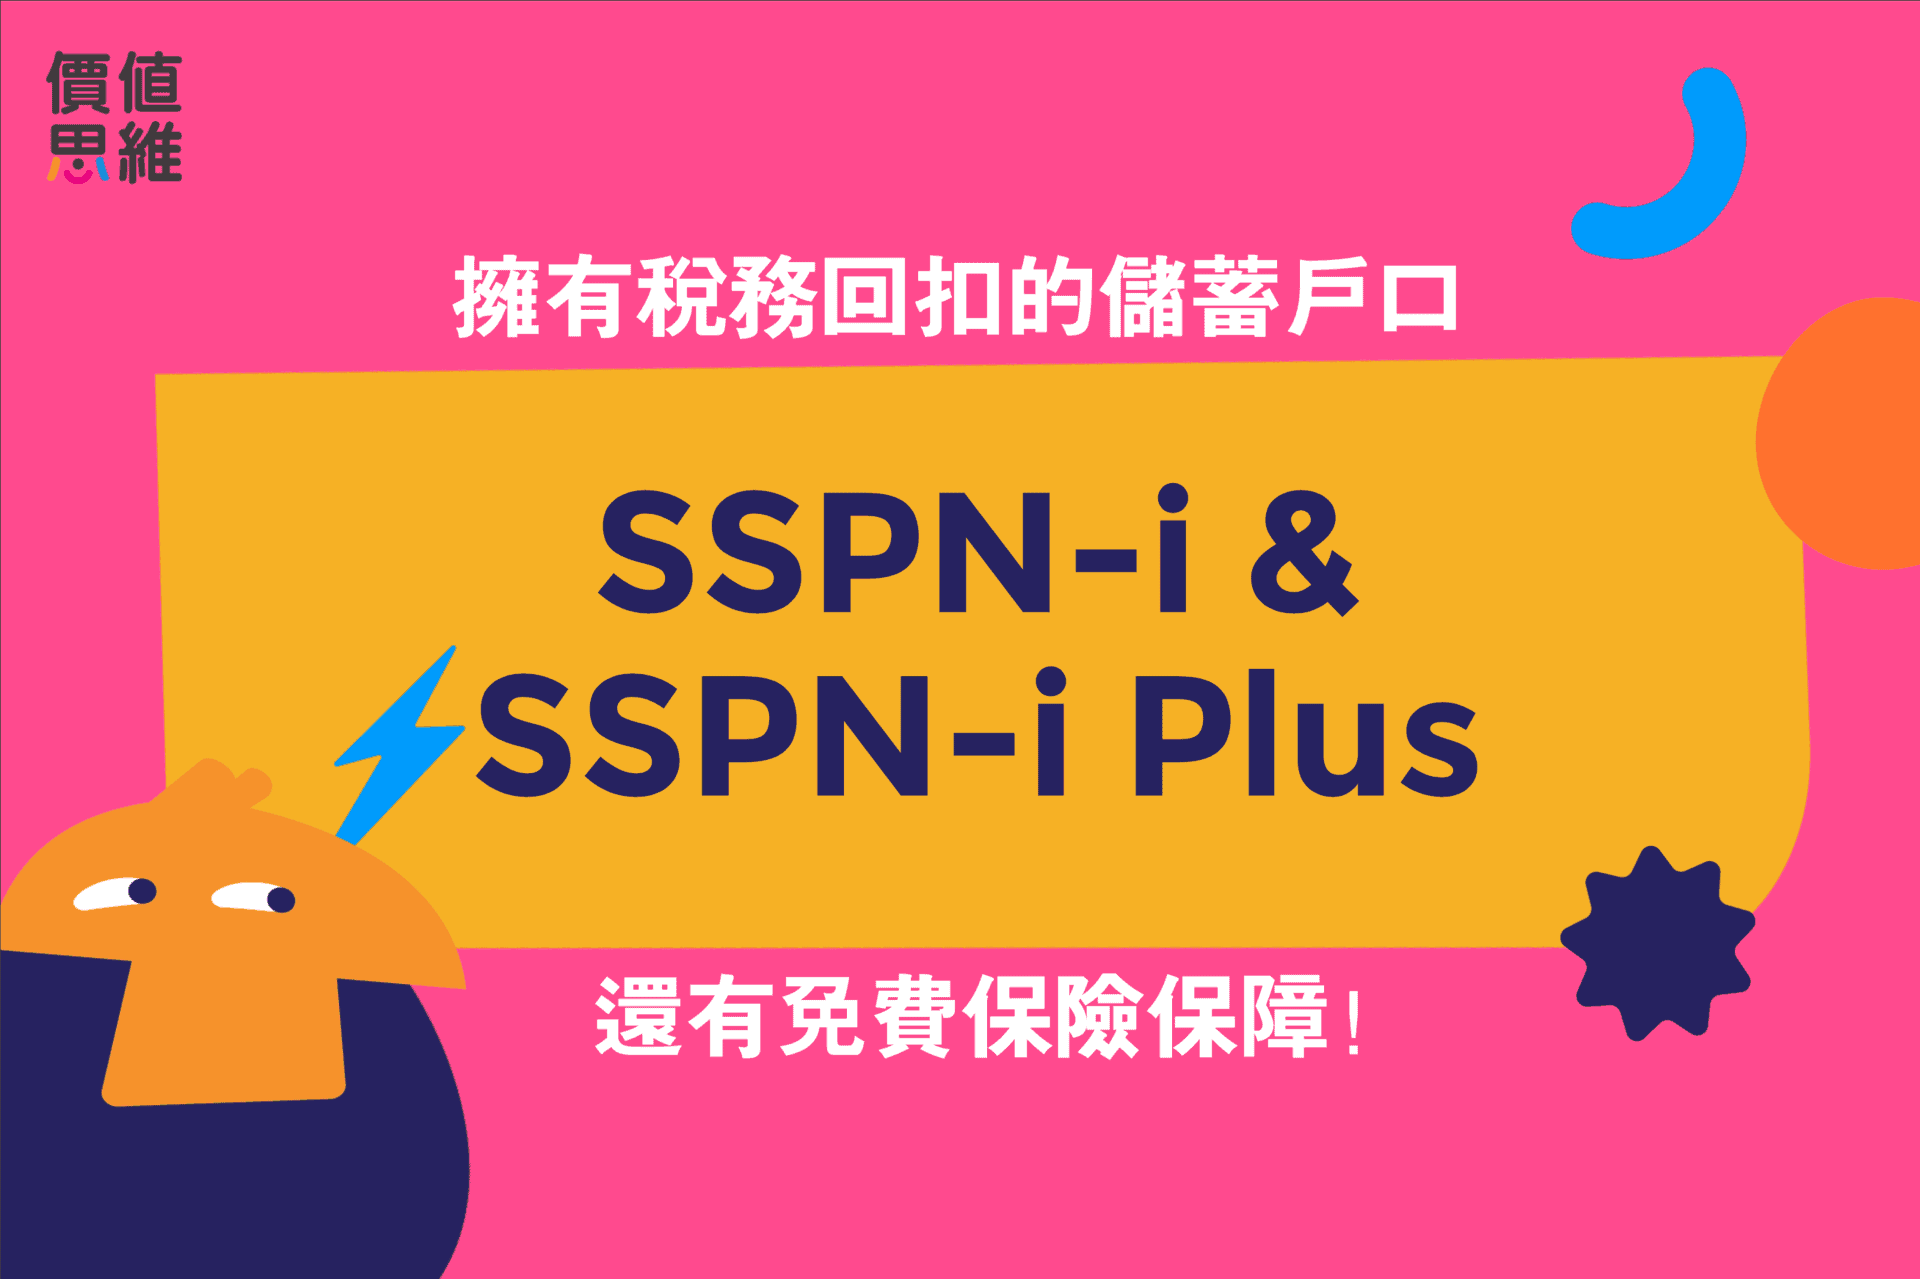 SSPN-i & SSPN-i Plus